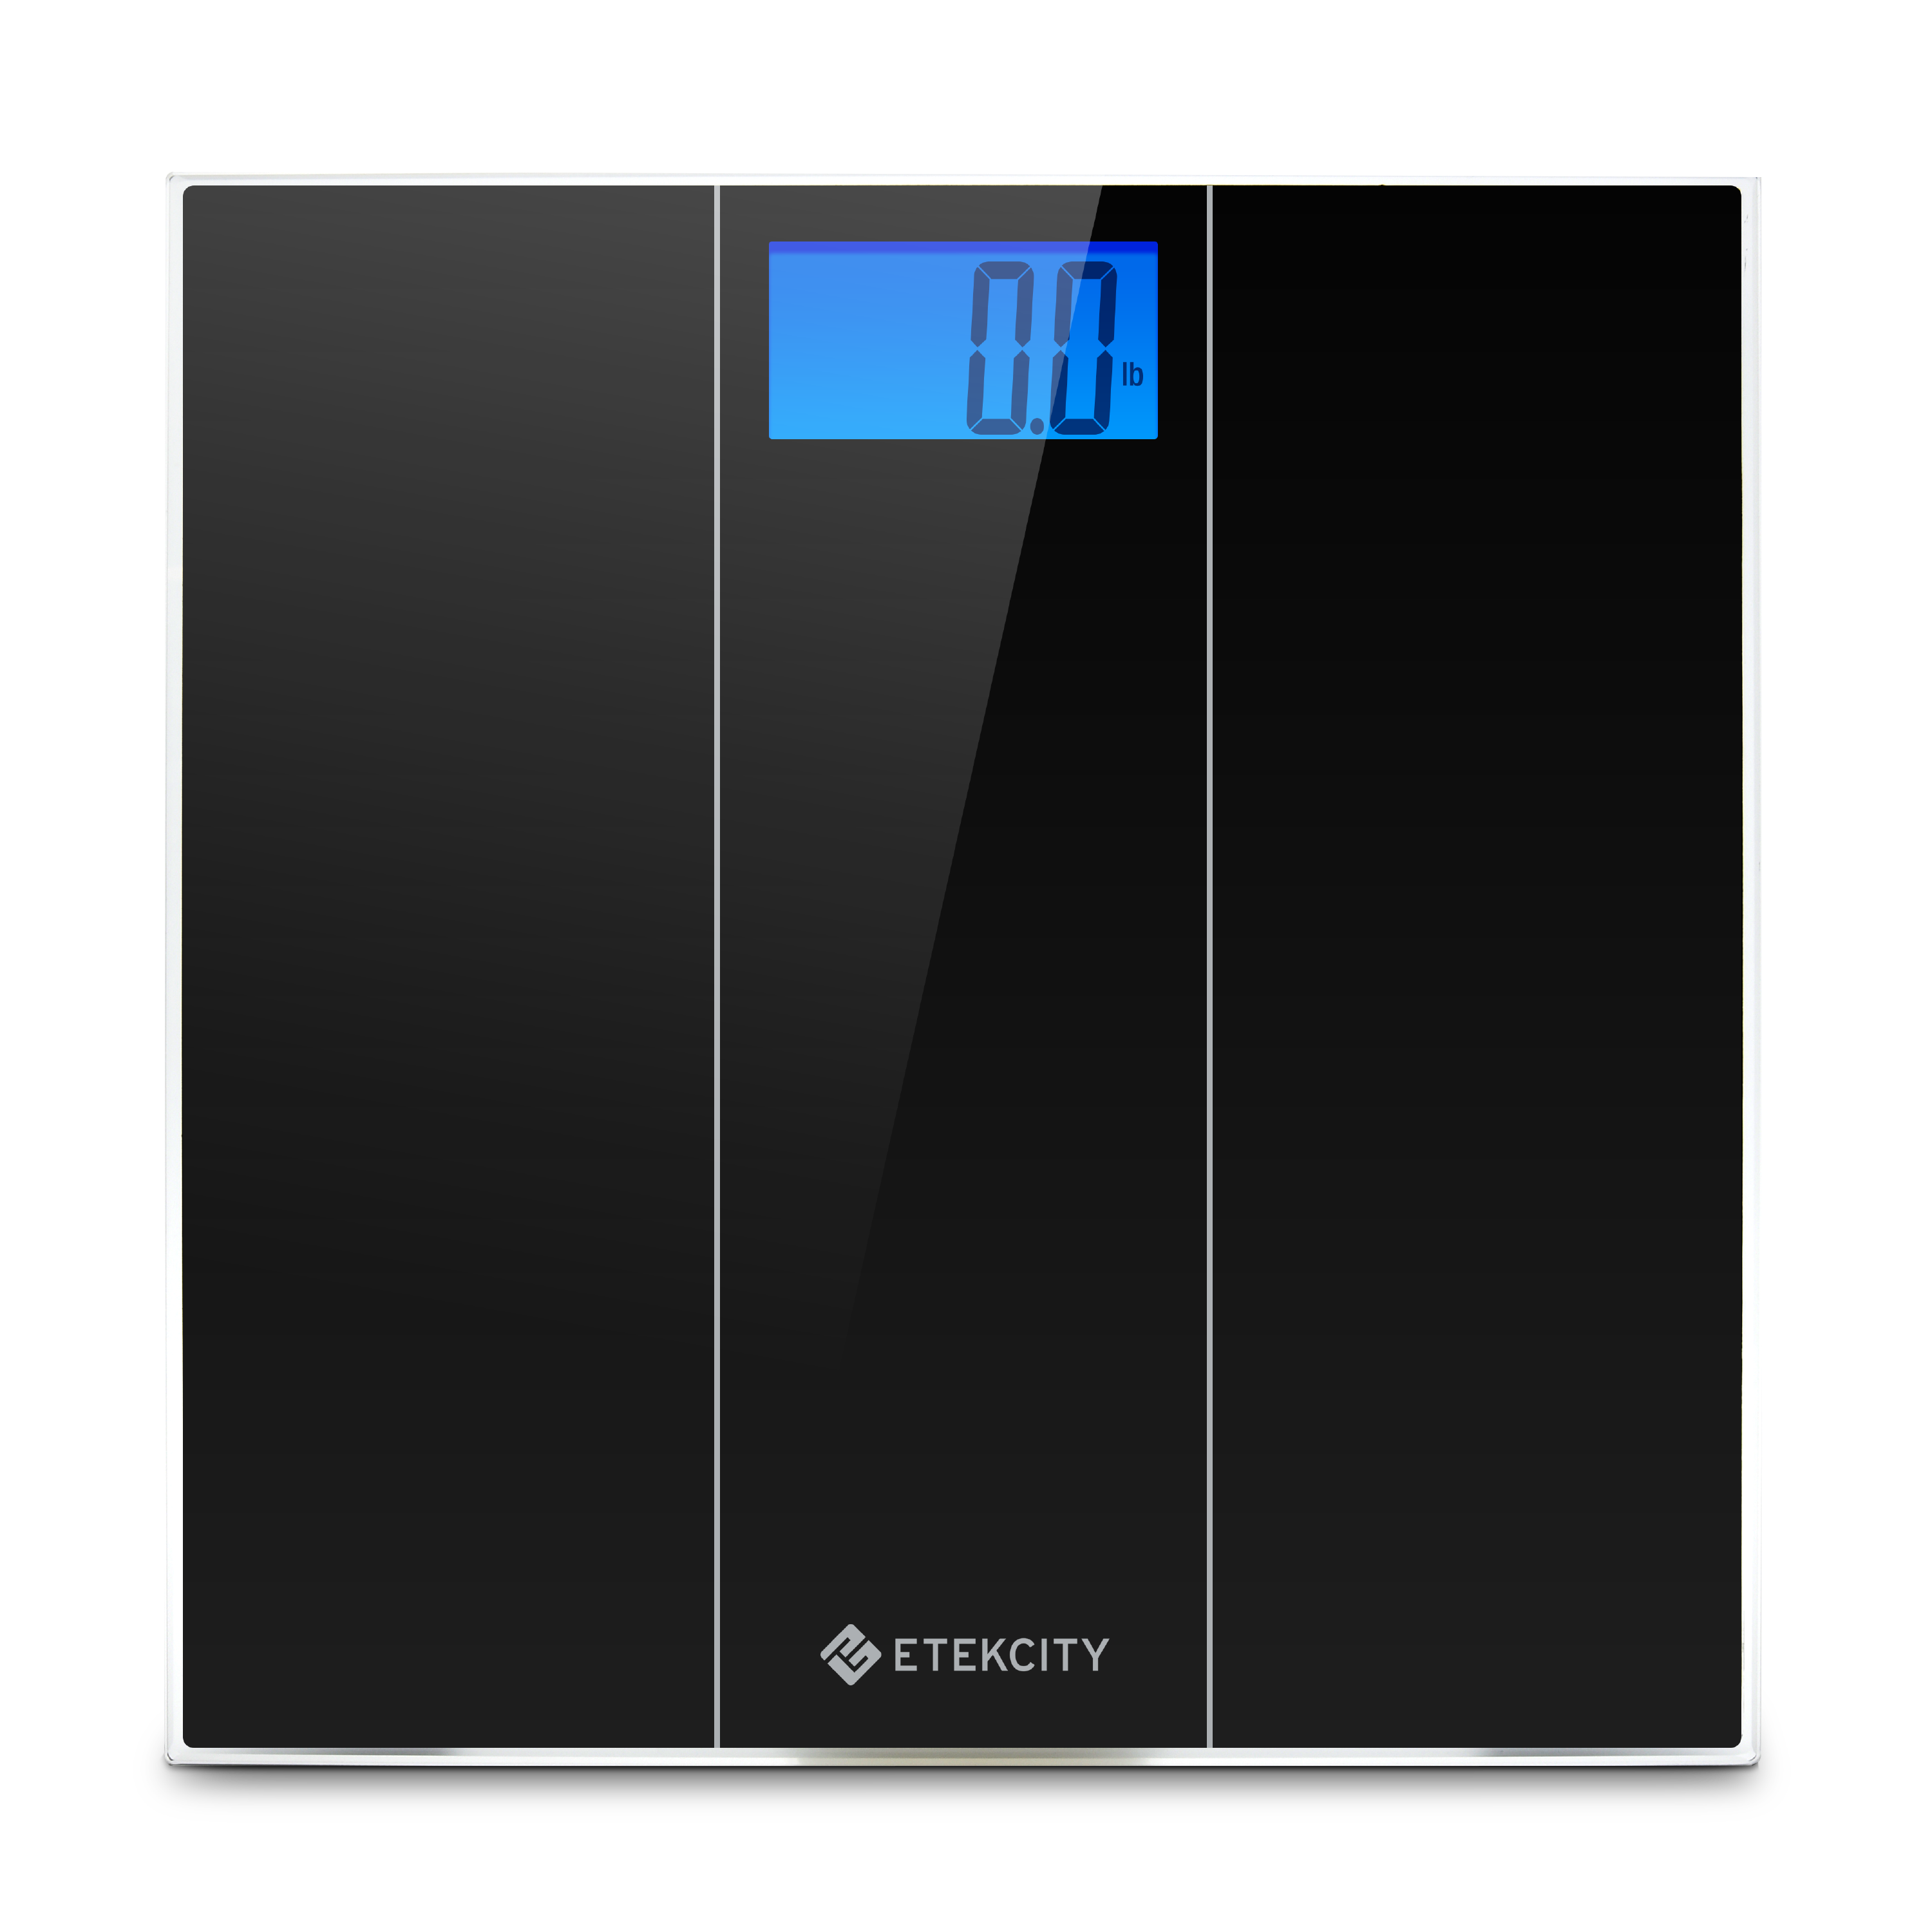 Etekcity Digital Body Weight Bathroom Scale, Model EB4074C, tested, working